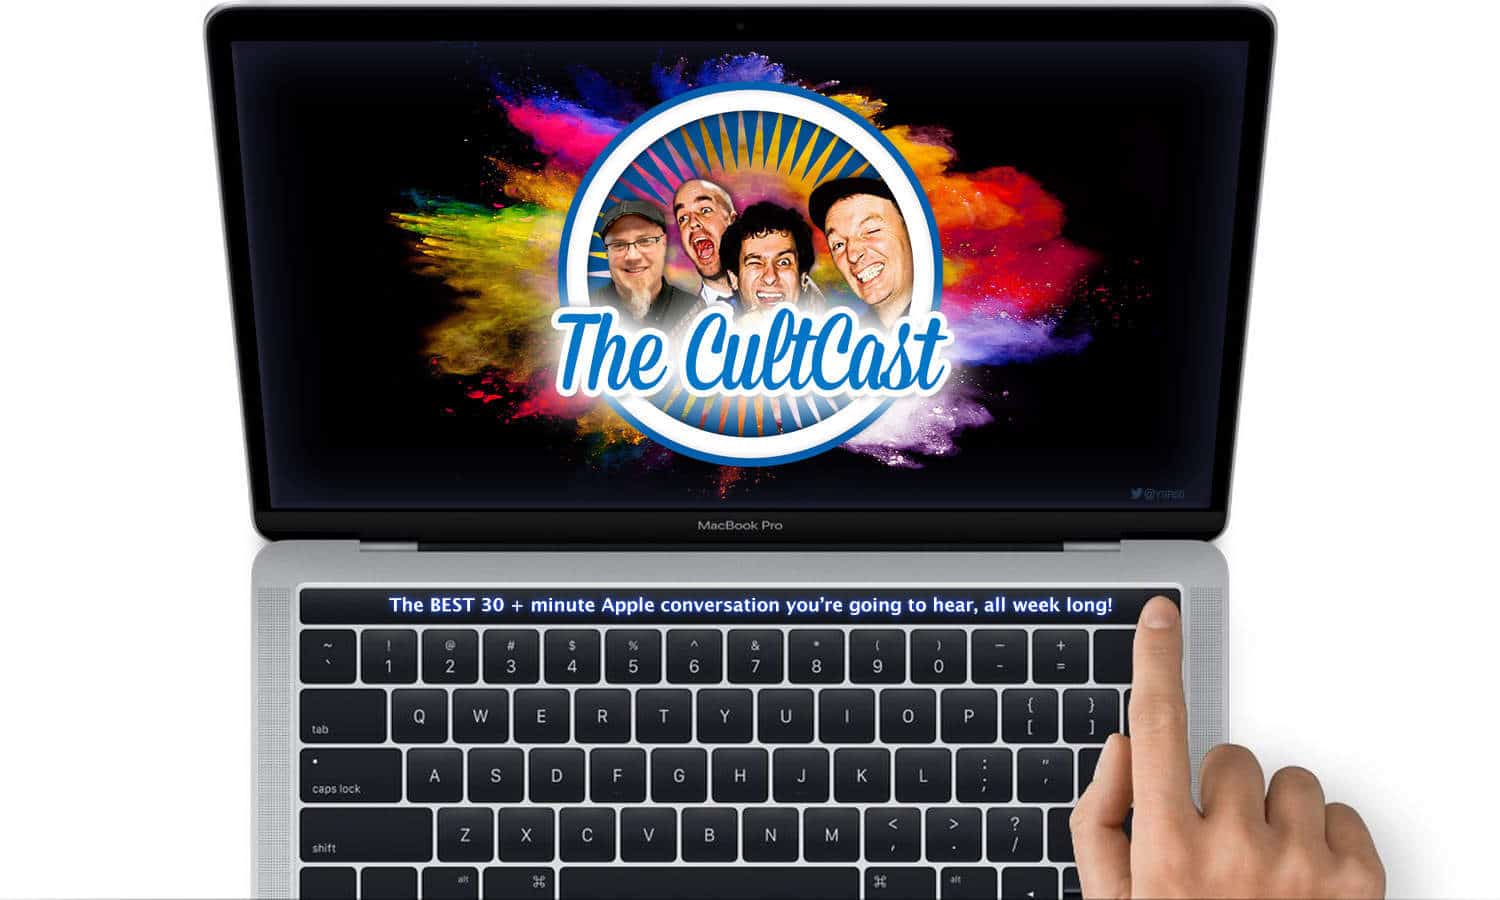 CultCast 2018 MacBook Pro